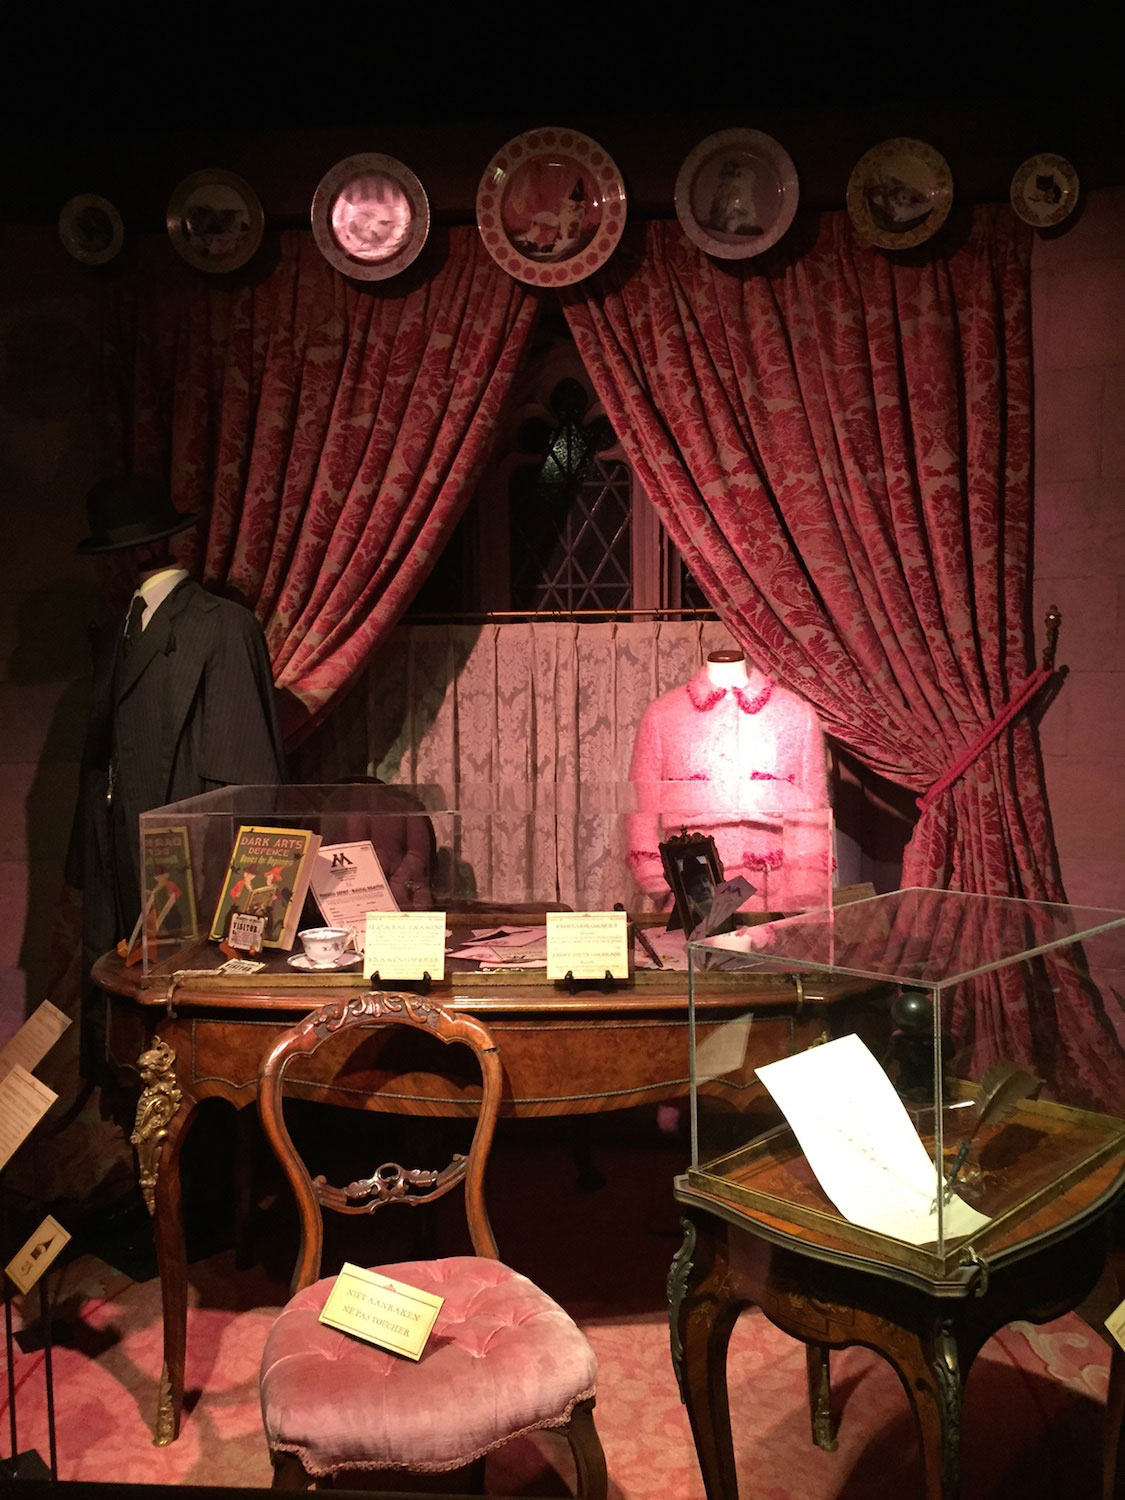 Dolores Umbridge’s office